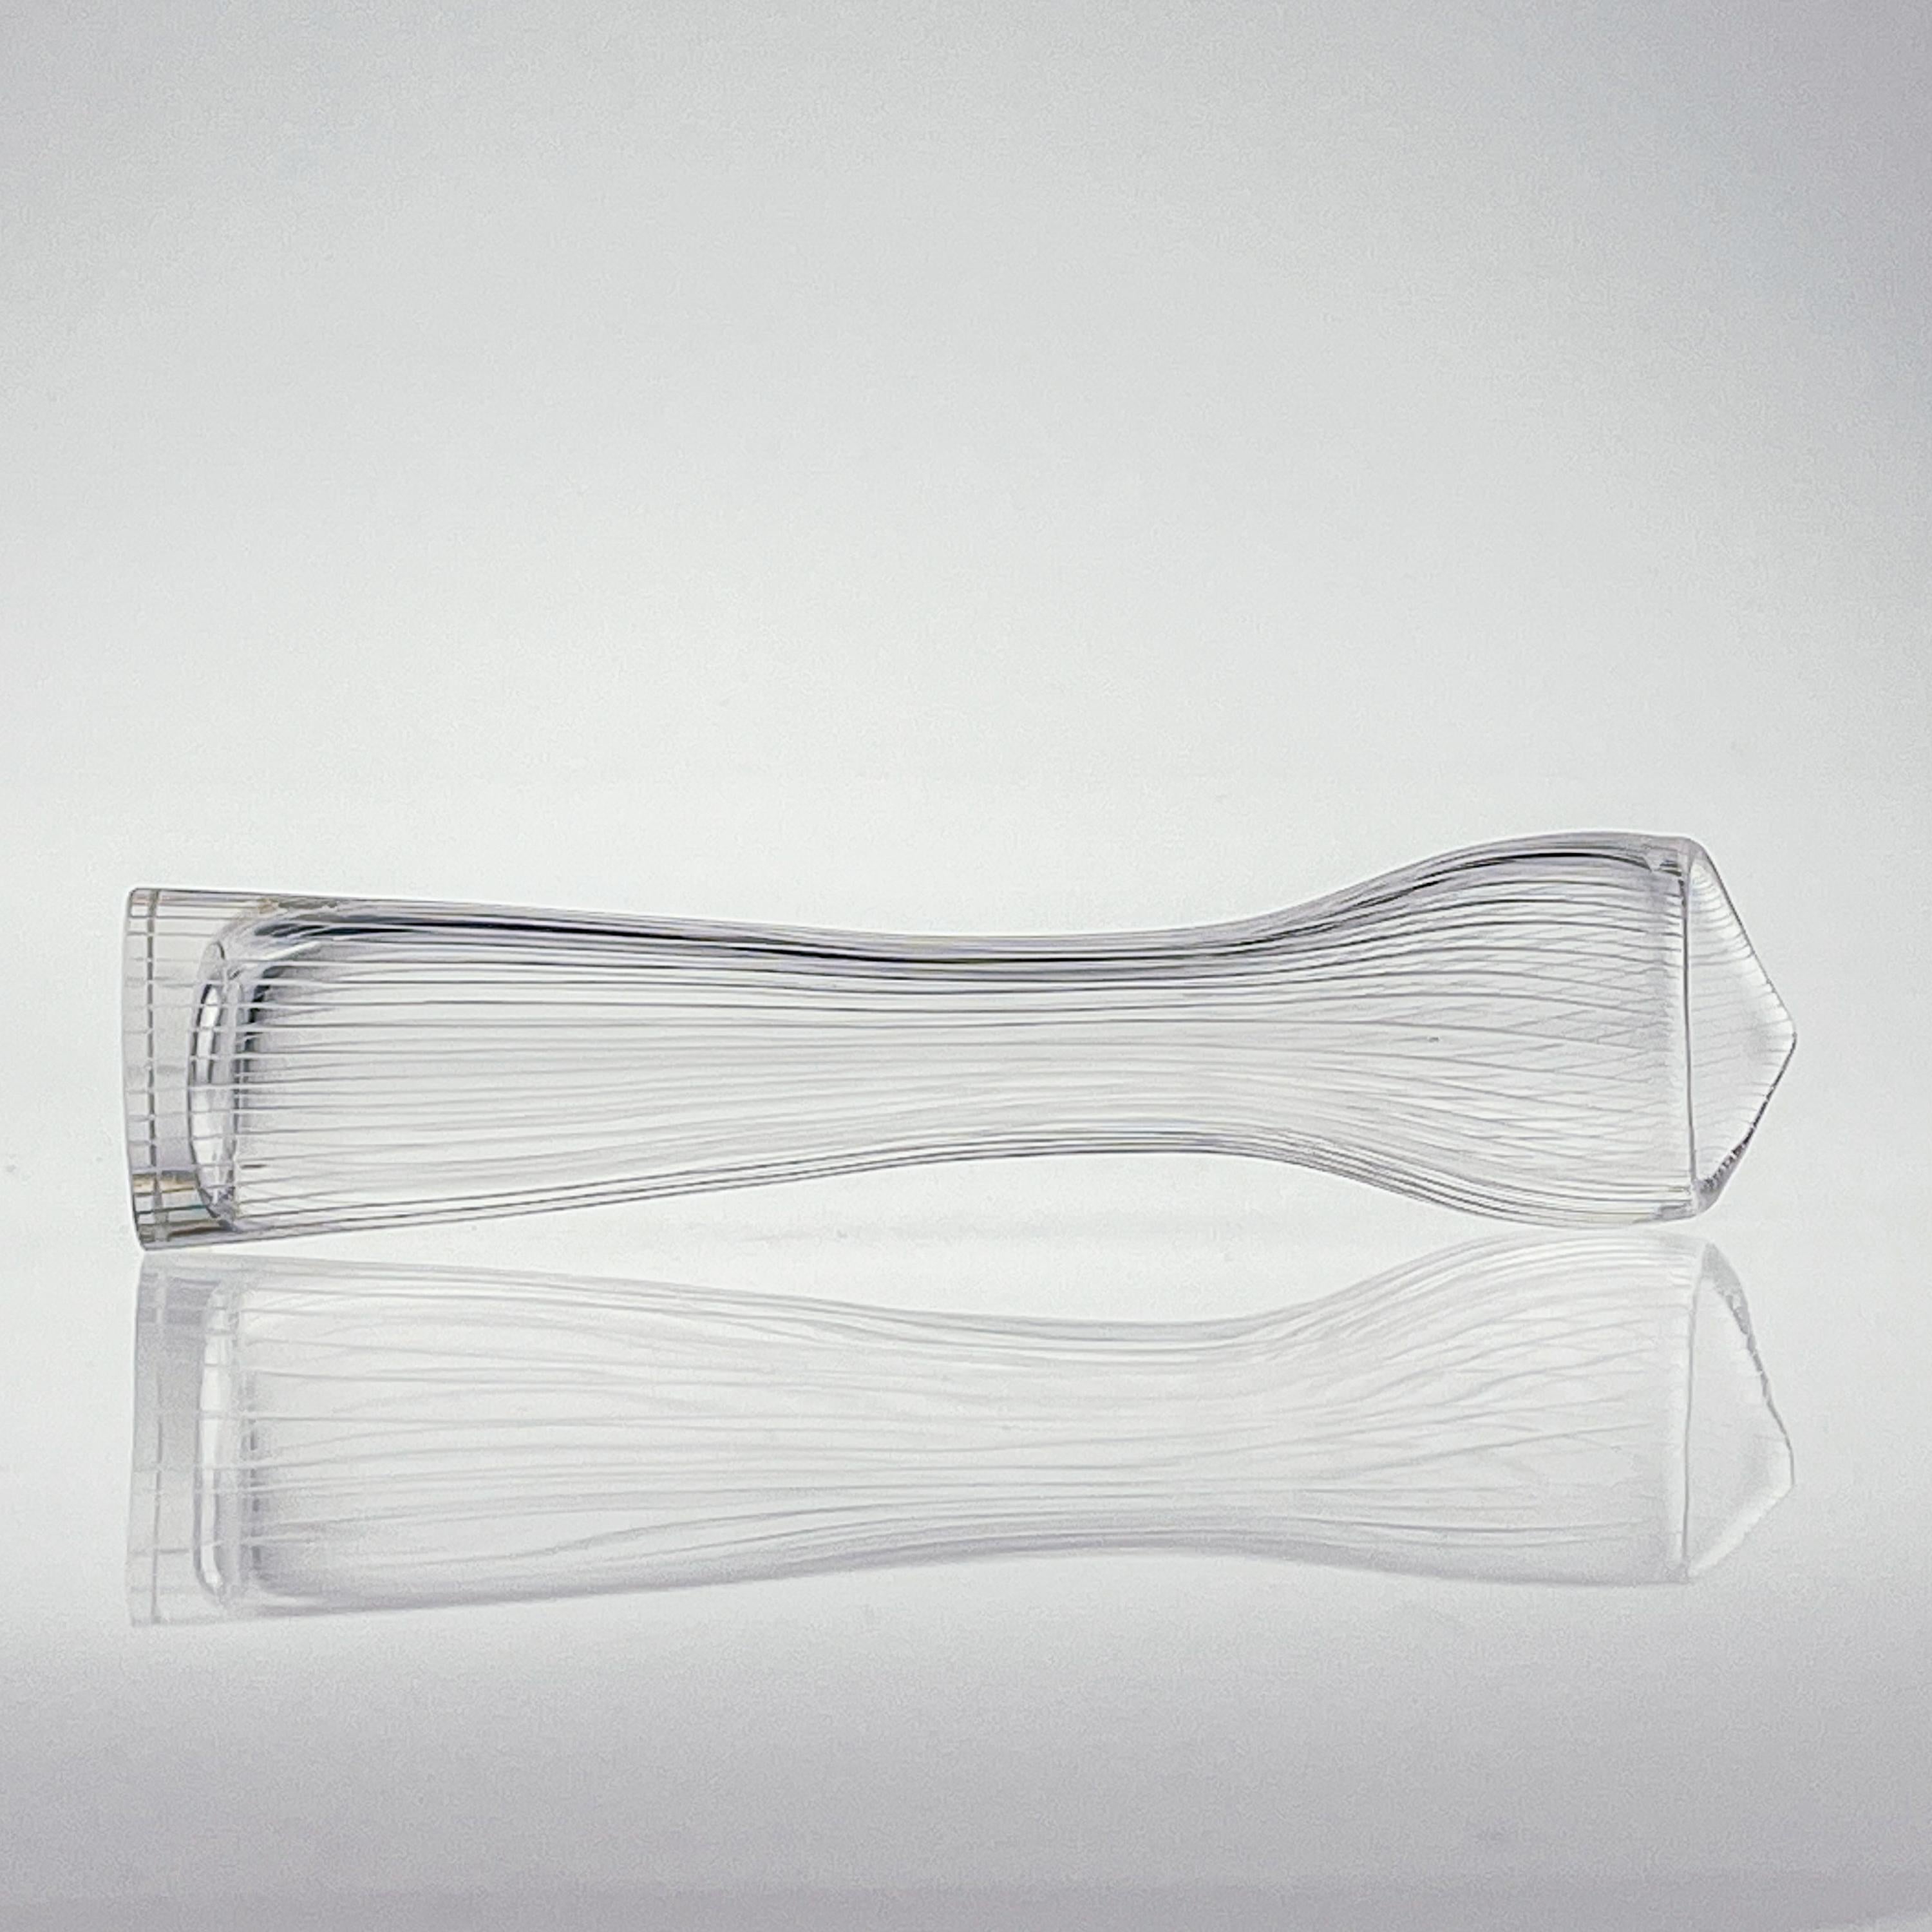 Scsndinavian Modern Tapio Wirkkala Crystal Line Cut Art Vase Handblown 1957 For Sale 4